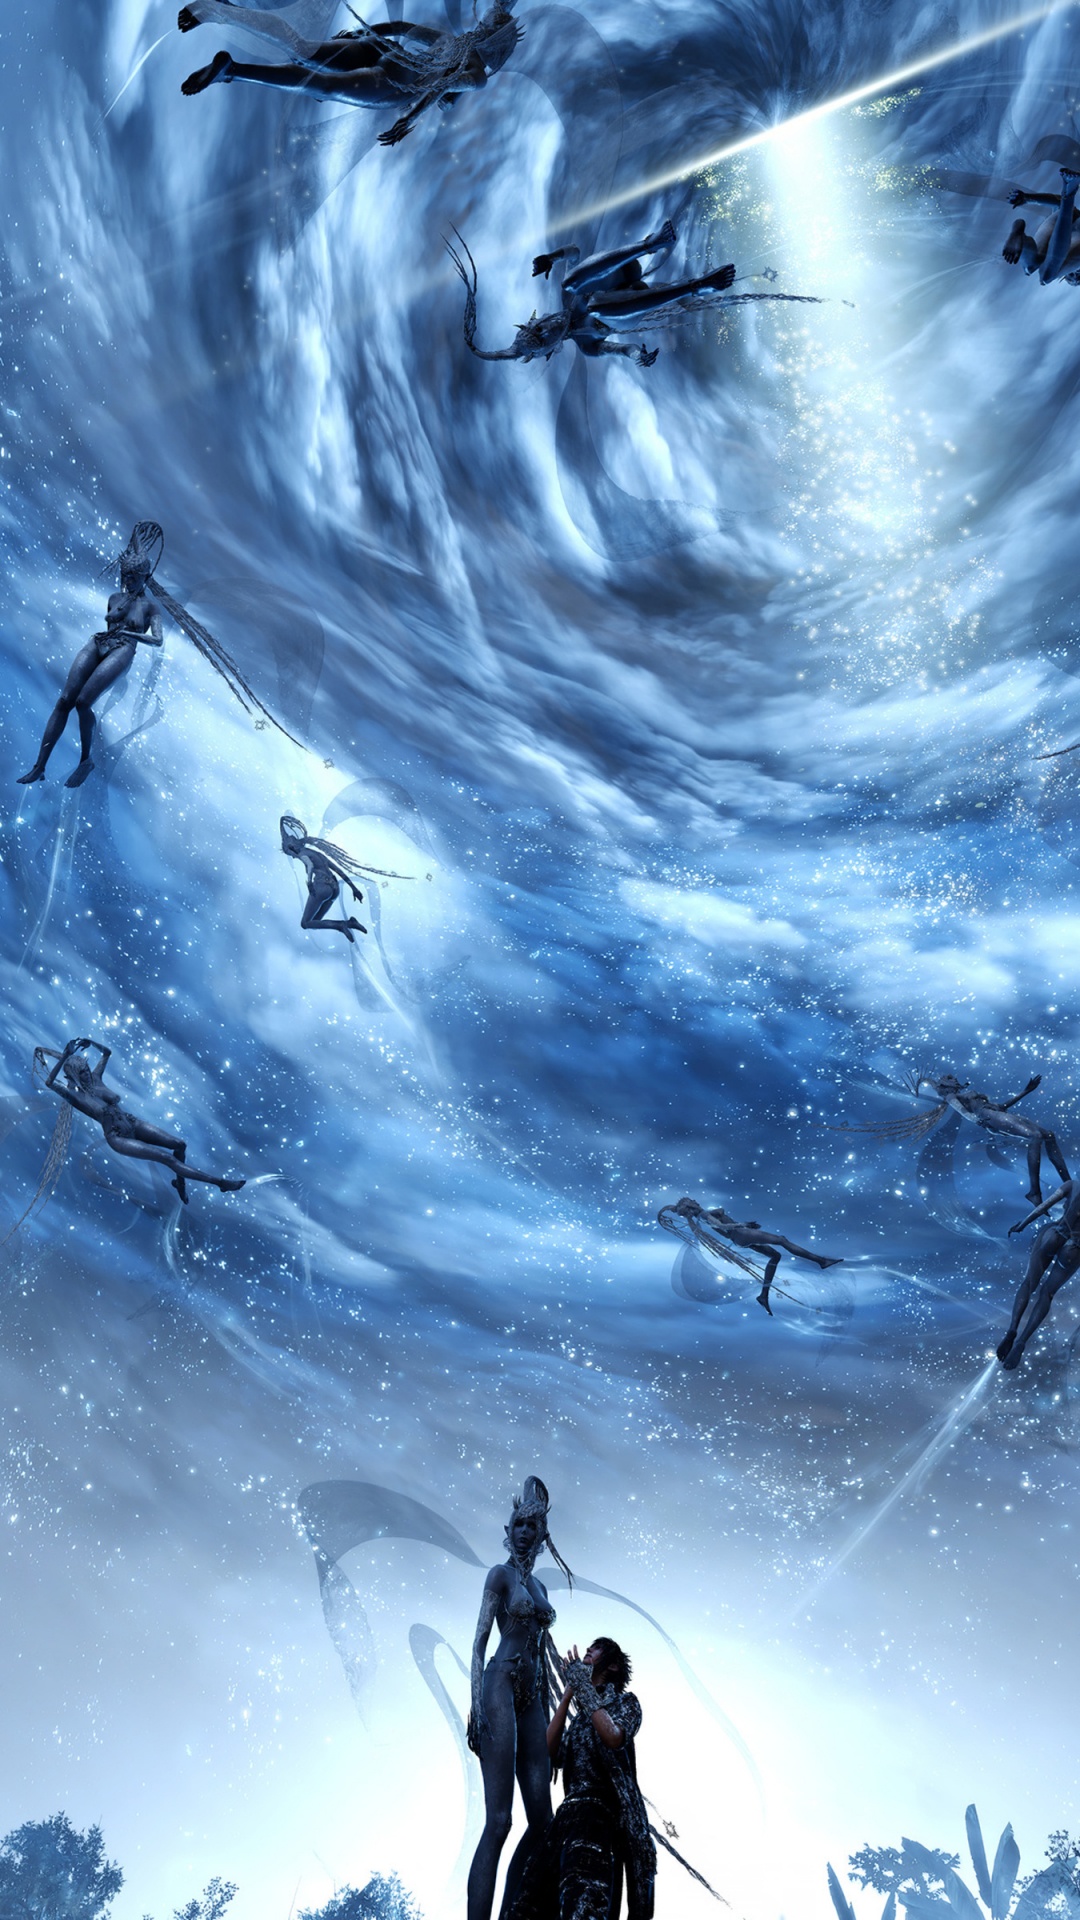 Final Fantasy Xv, Final Fantasy VII Remake, Illustration, Espace, la Mythologie. Wallpaper in 1080x1920 Resolution